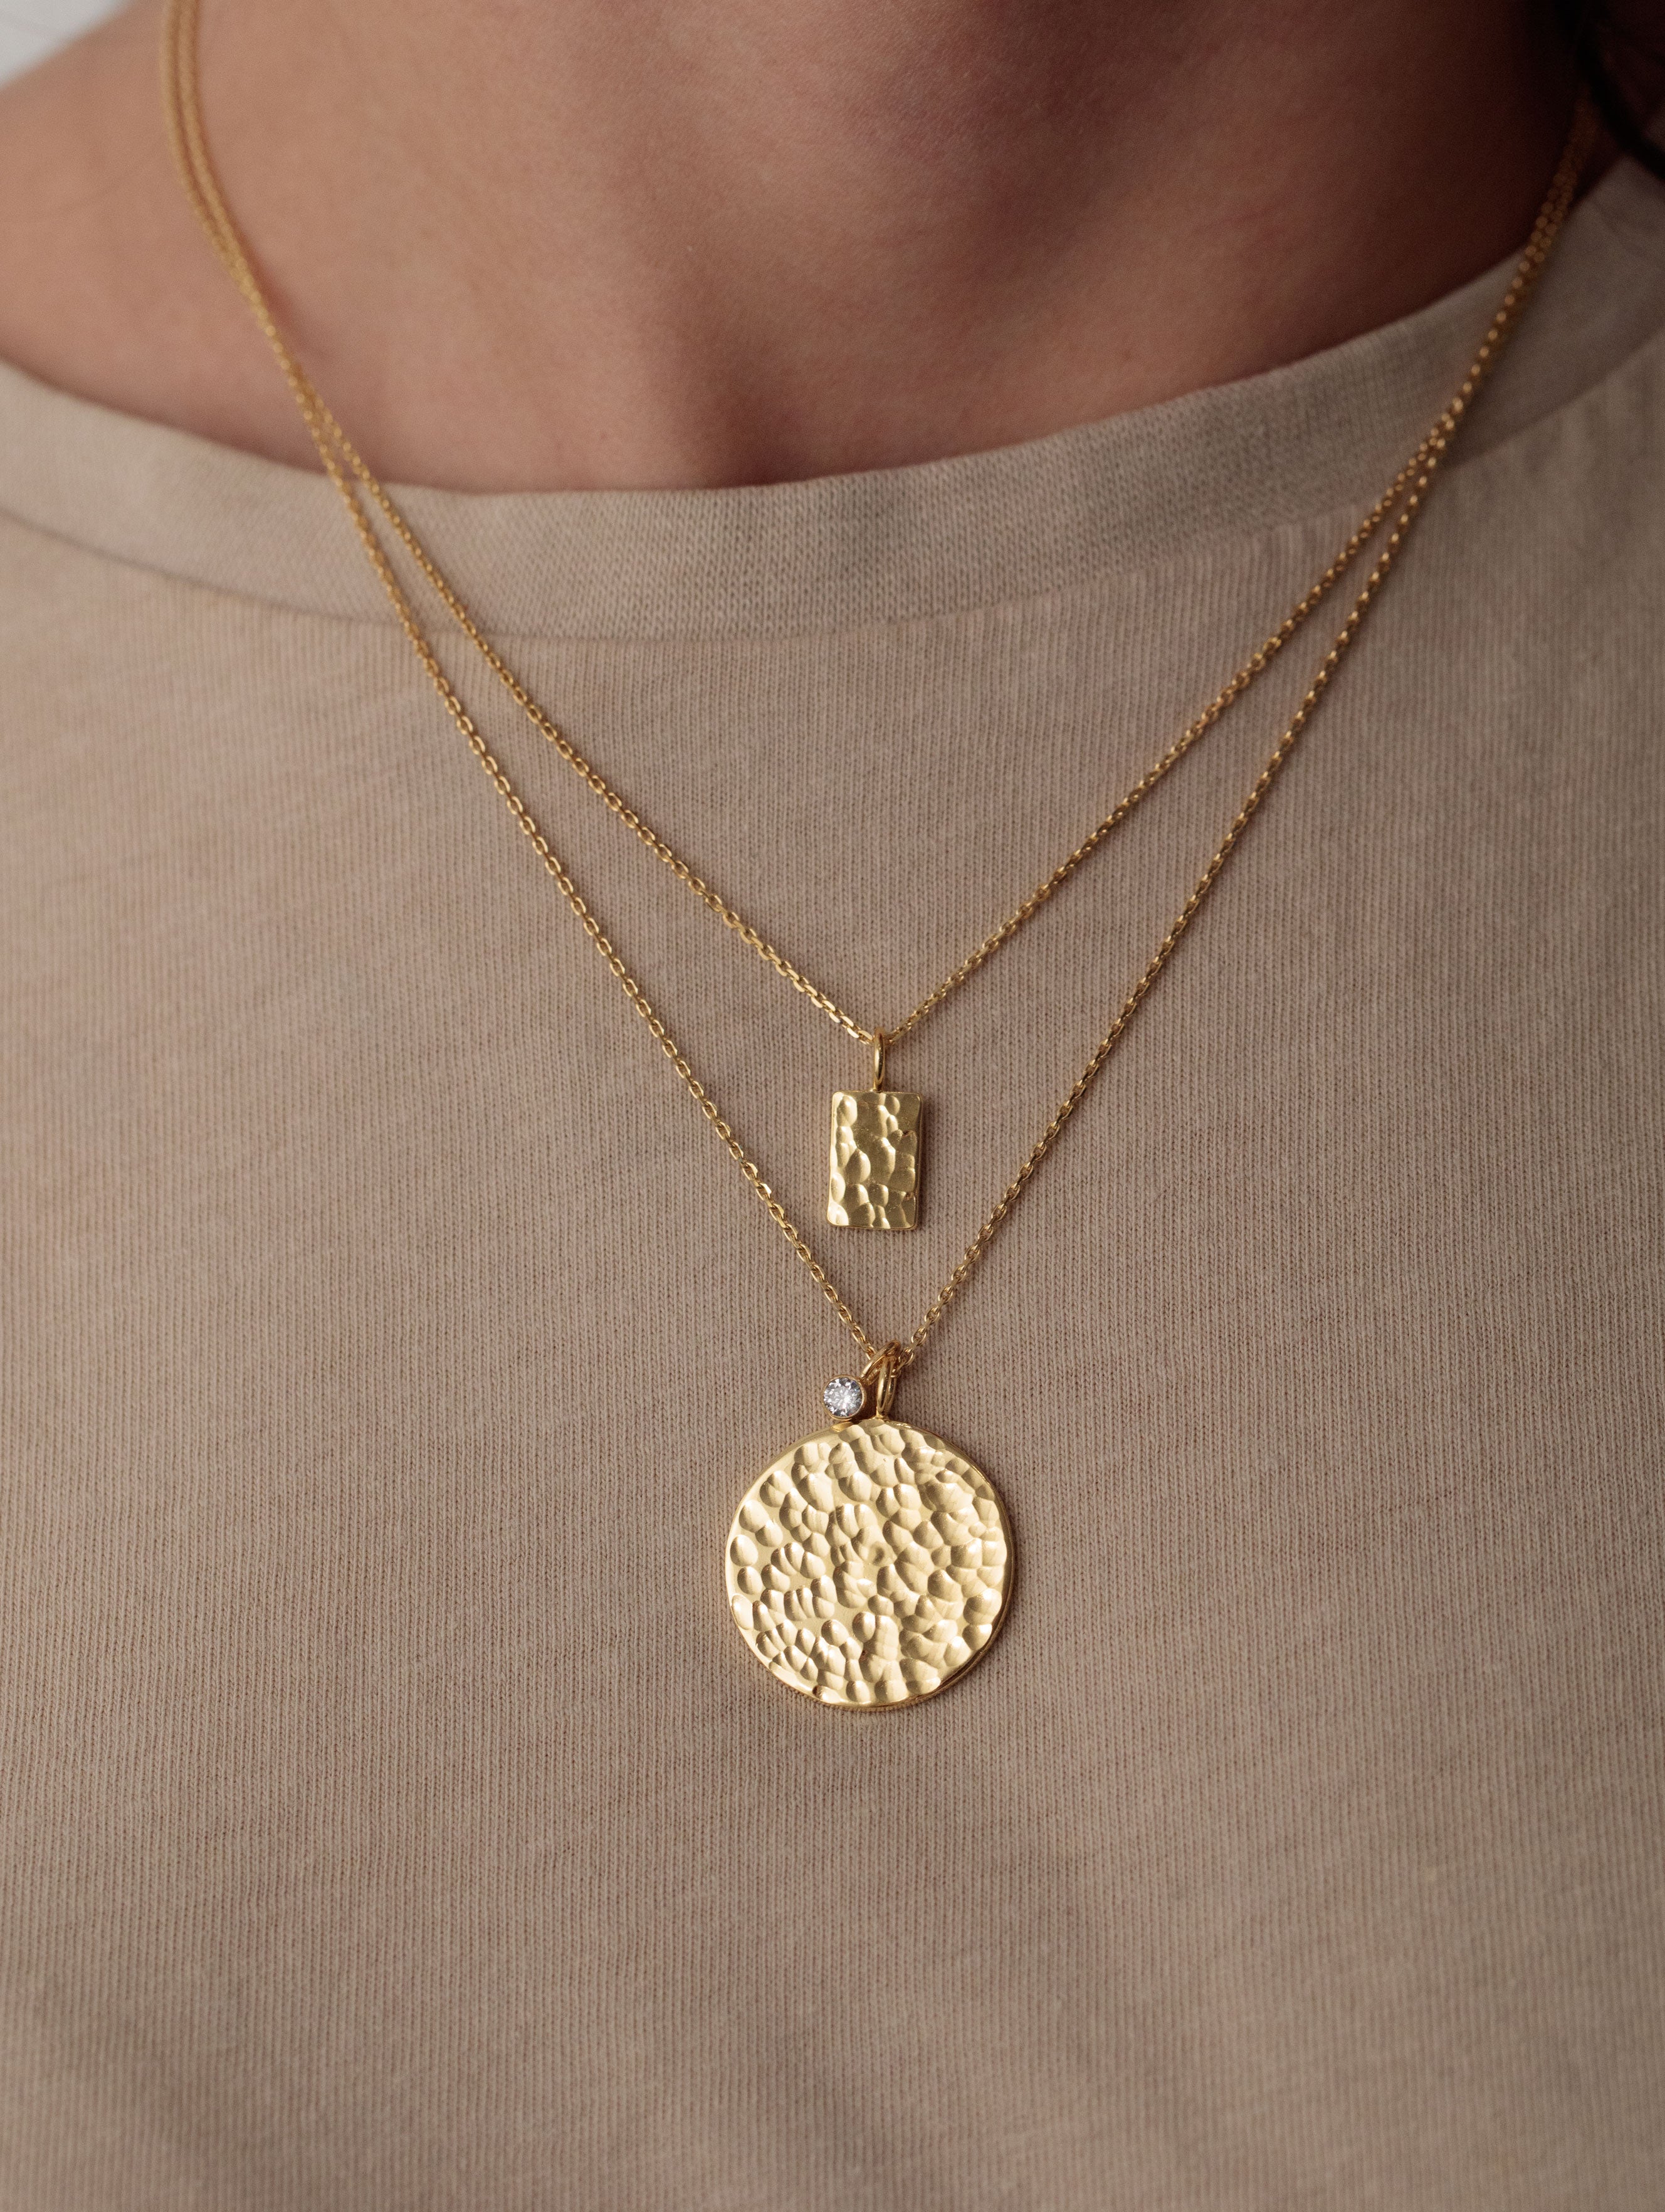 Shape Necklace with stone - Round Large